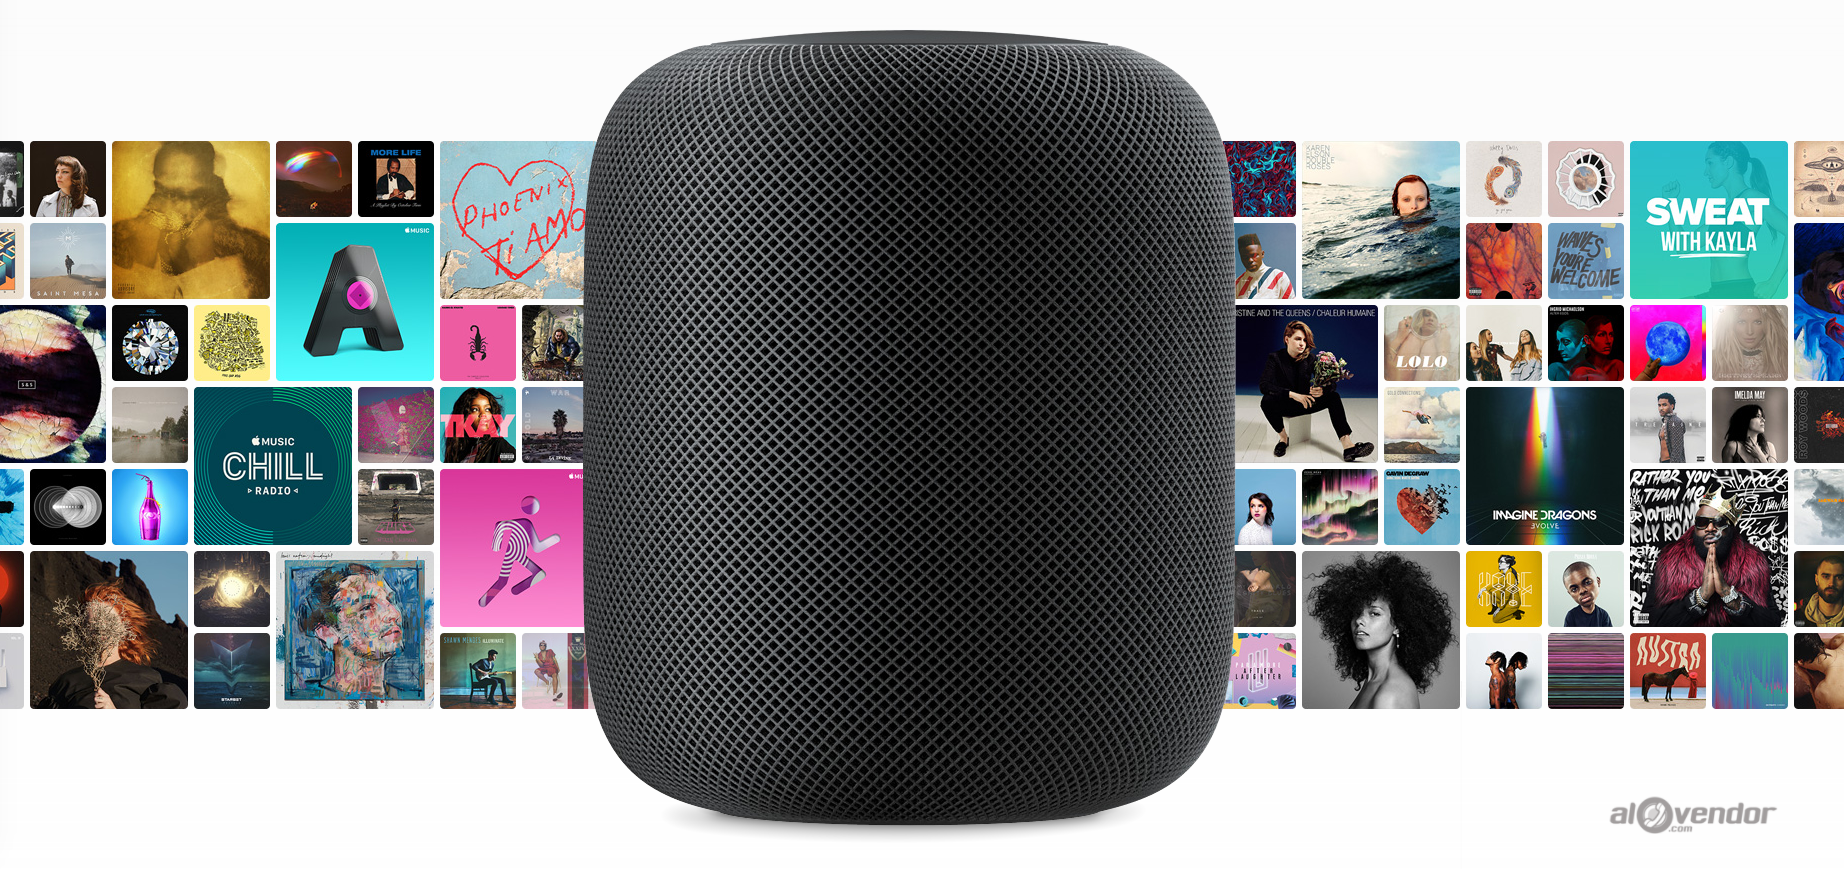 Apple launched super smart speaker HomePod